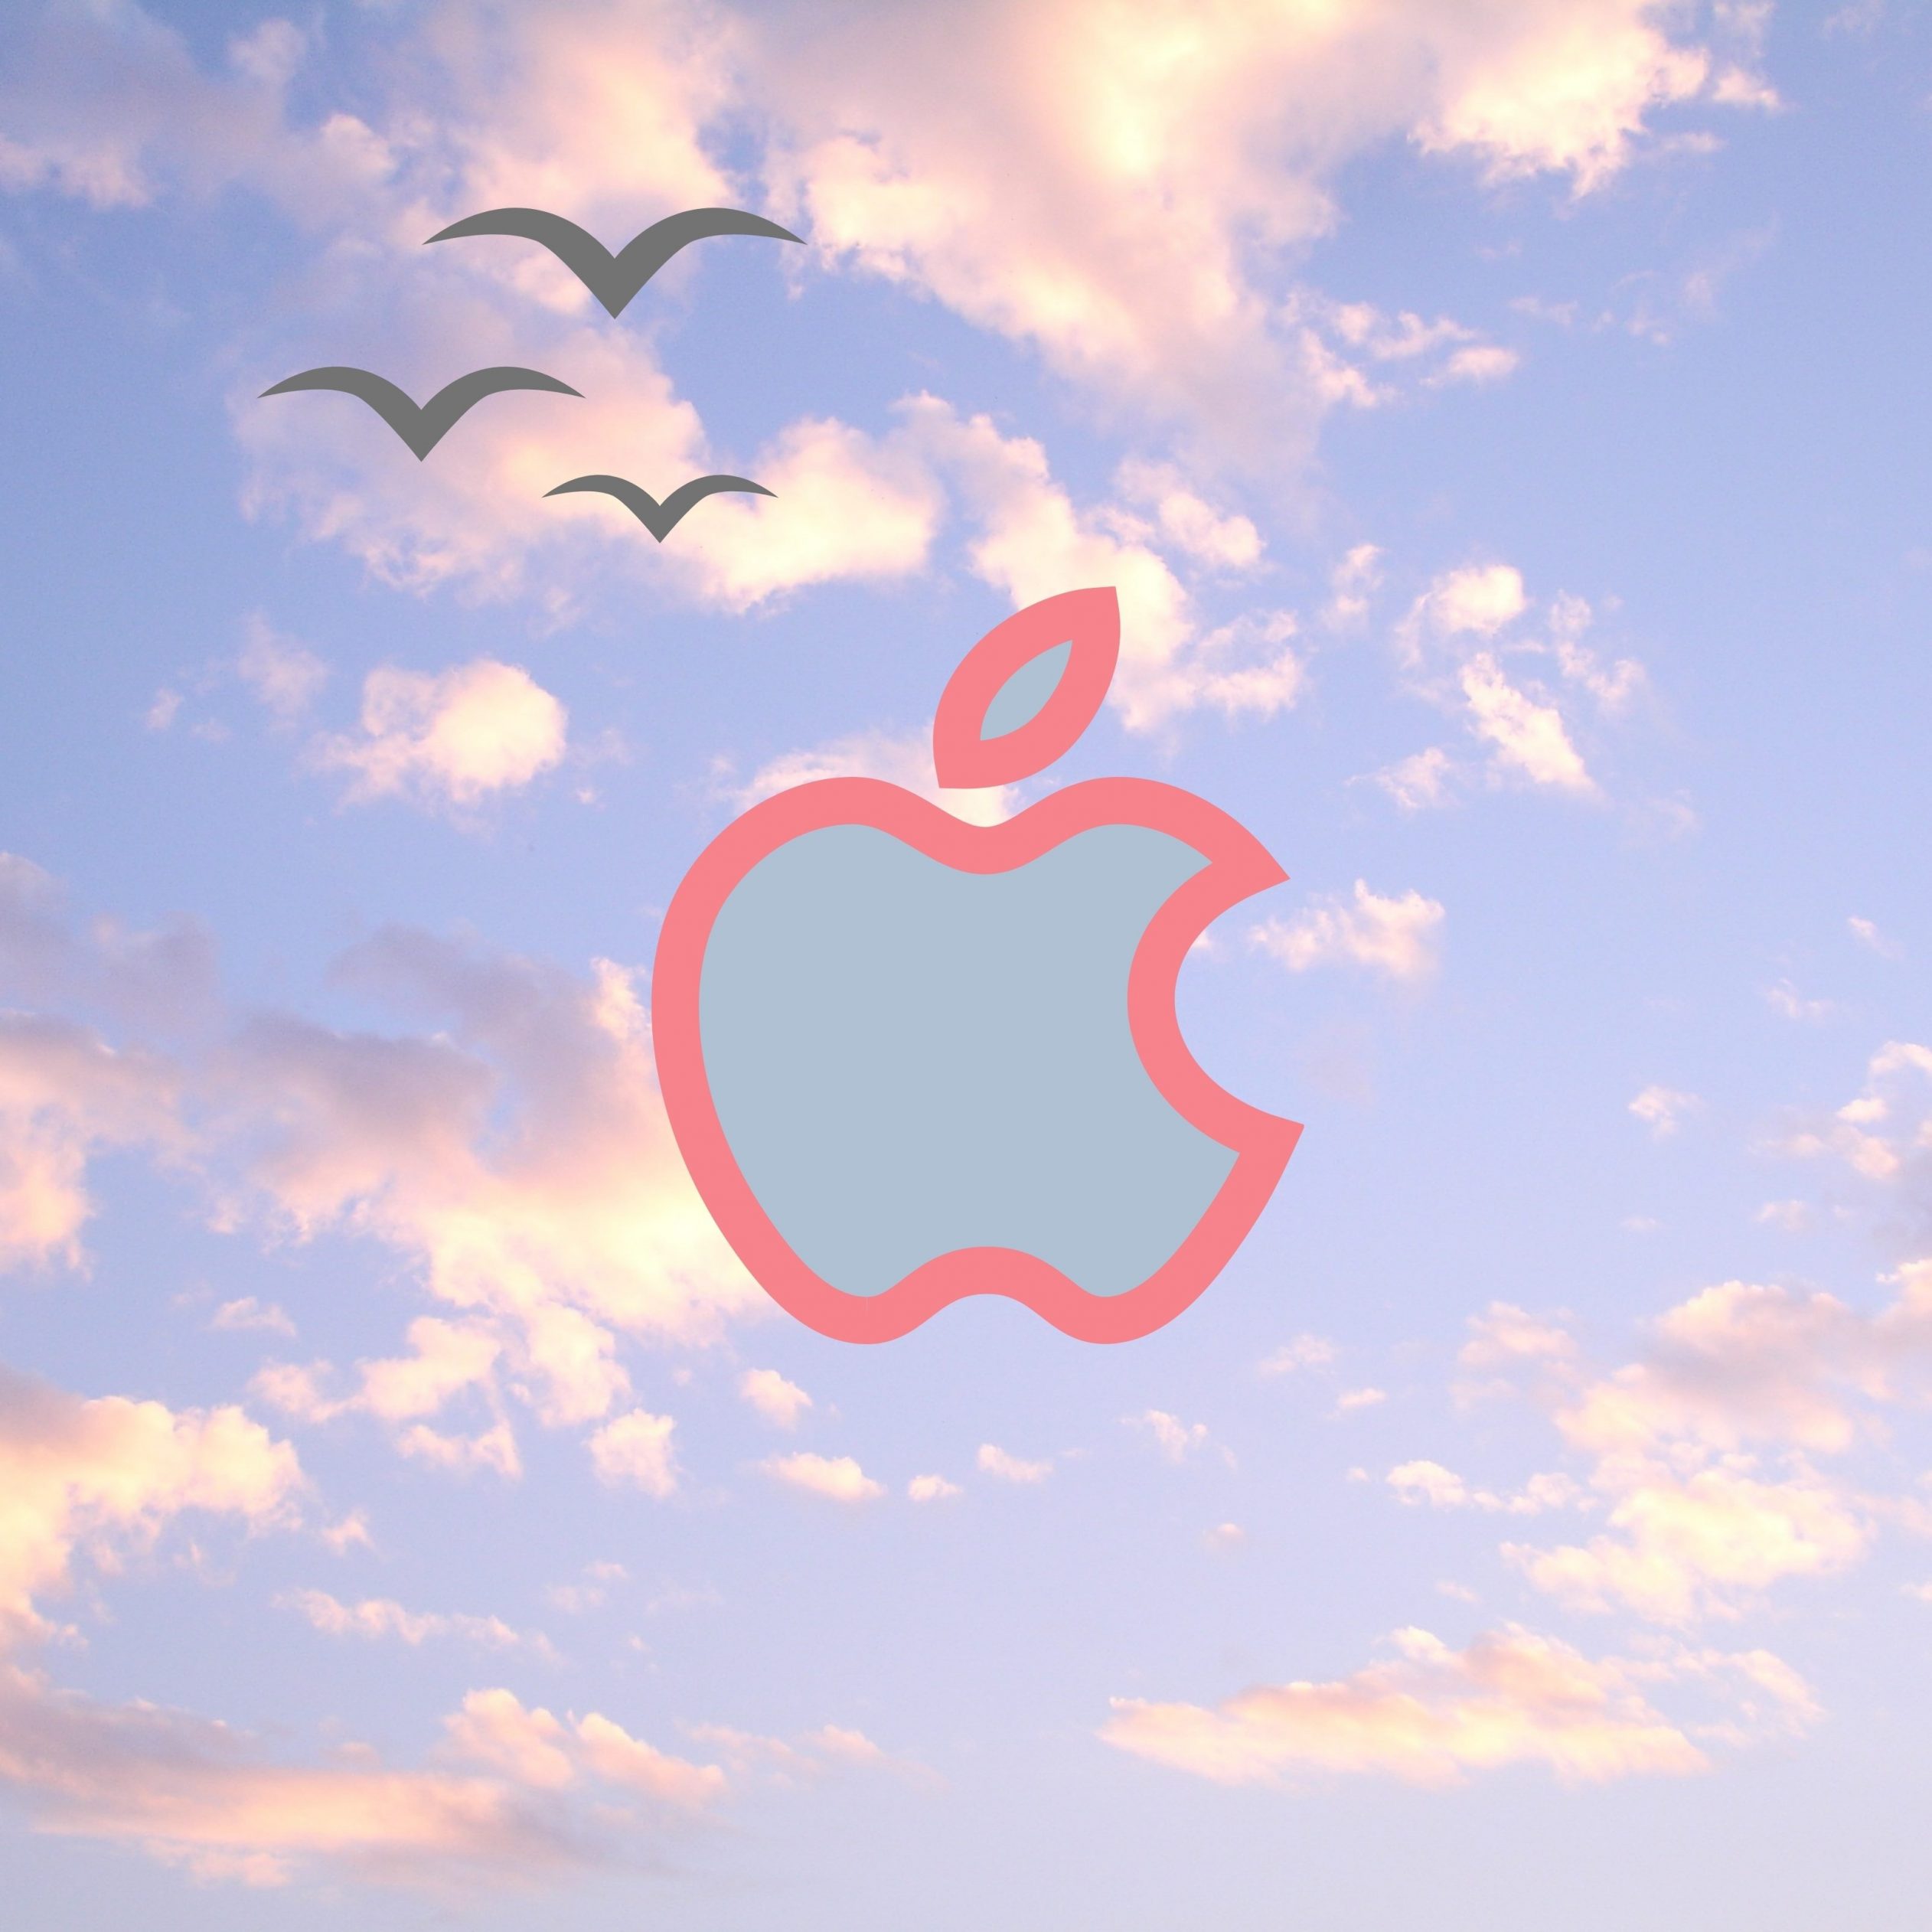 2524x2524 Parallax wallpaper 4k Apple Logo Pink Blue Sky Clouds Birds iPad Wallpaper 2524x2524 pixels resolution